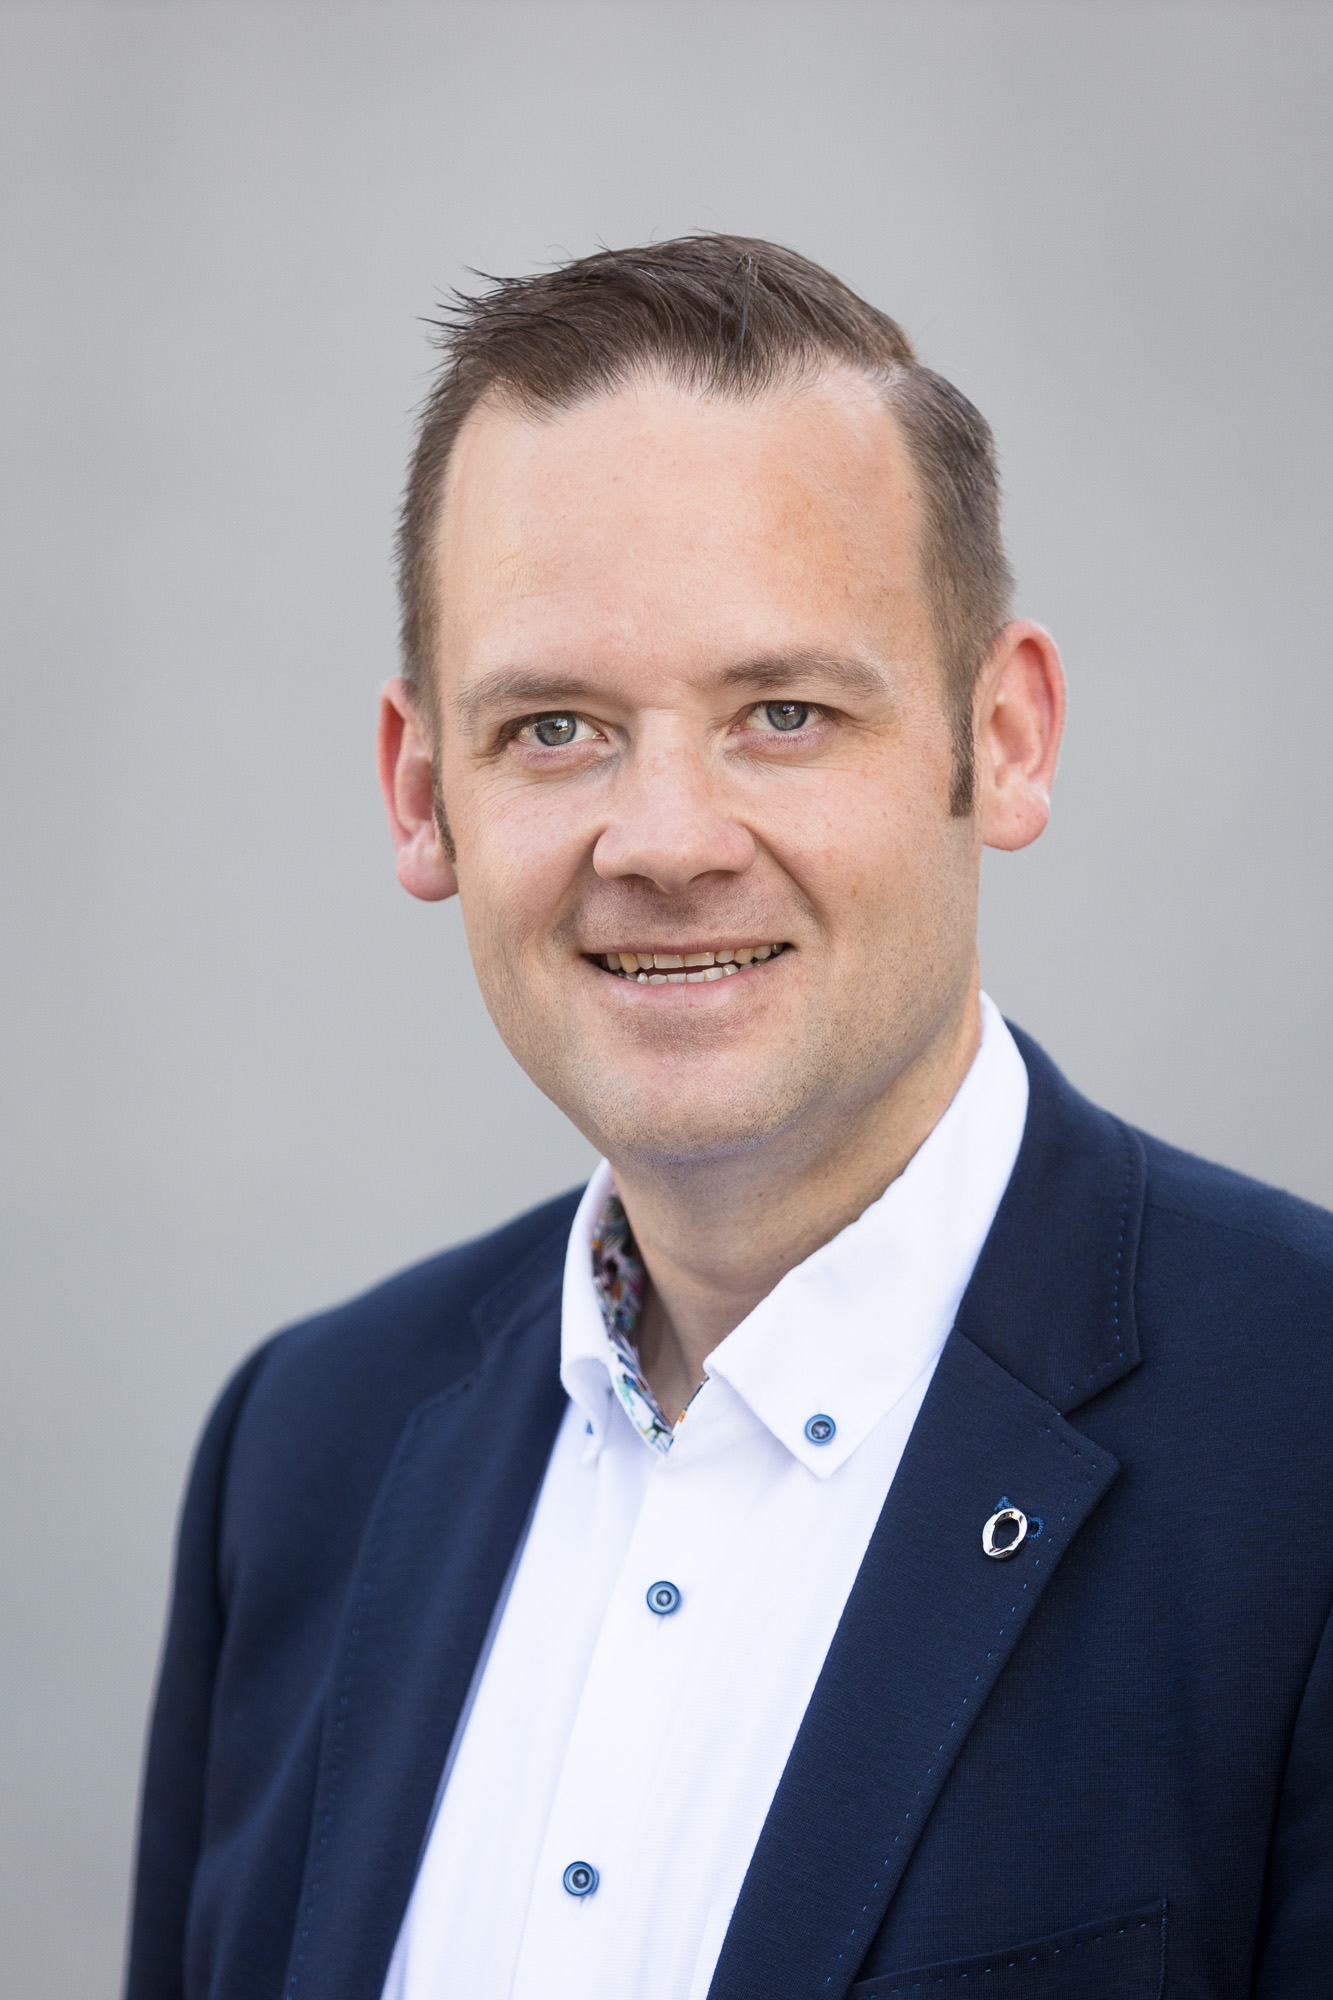 Expert Marketplace - Henrik Lehnhardt - Einblendungen 0